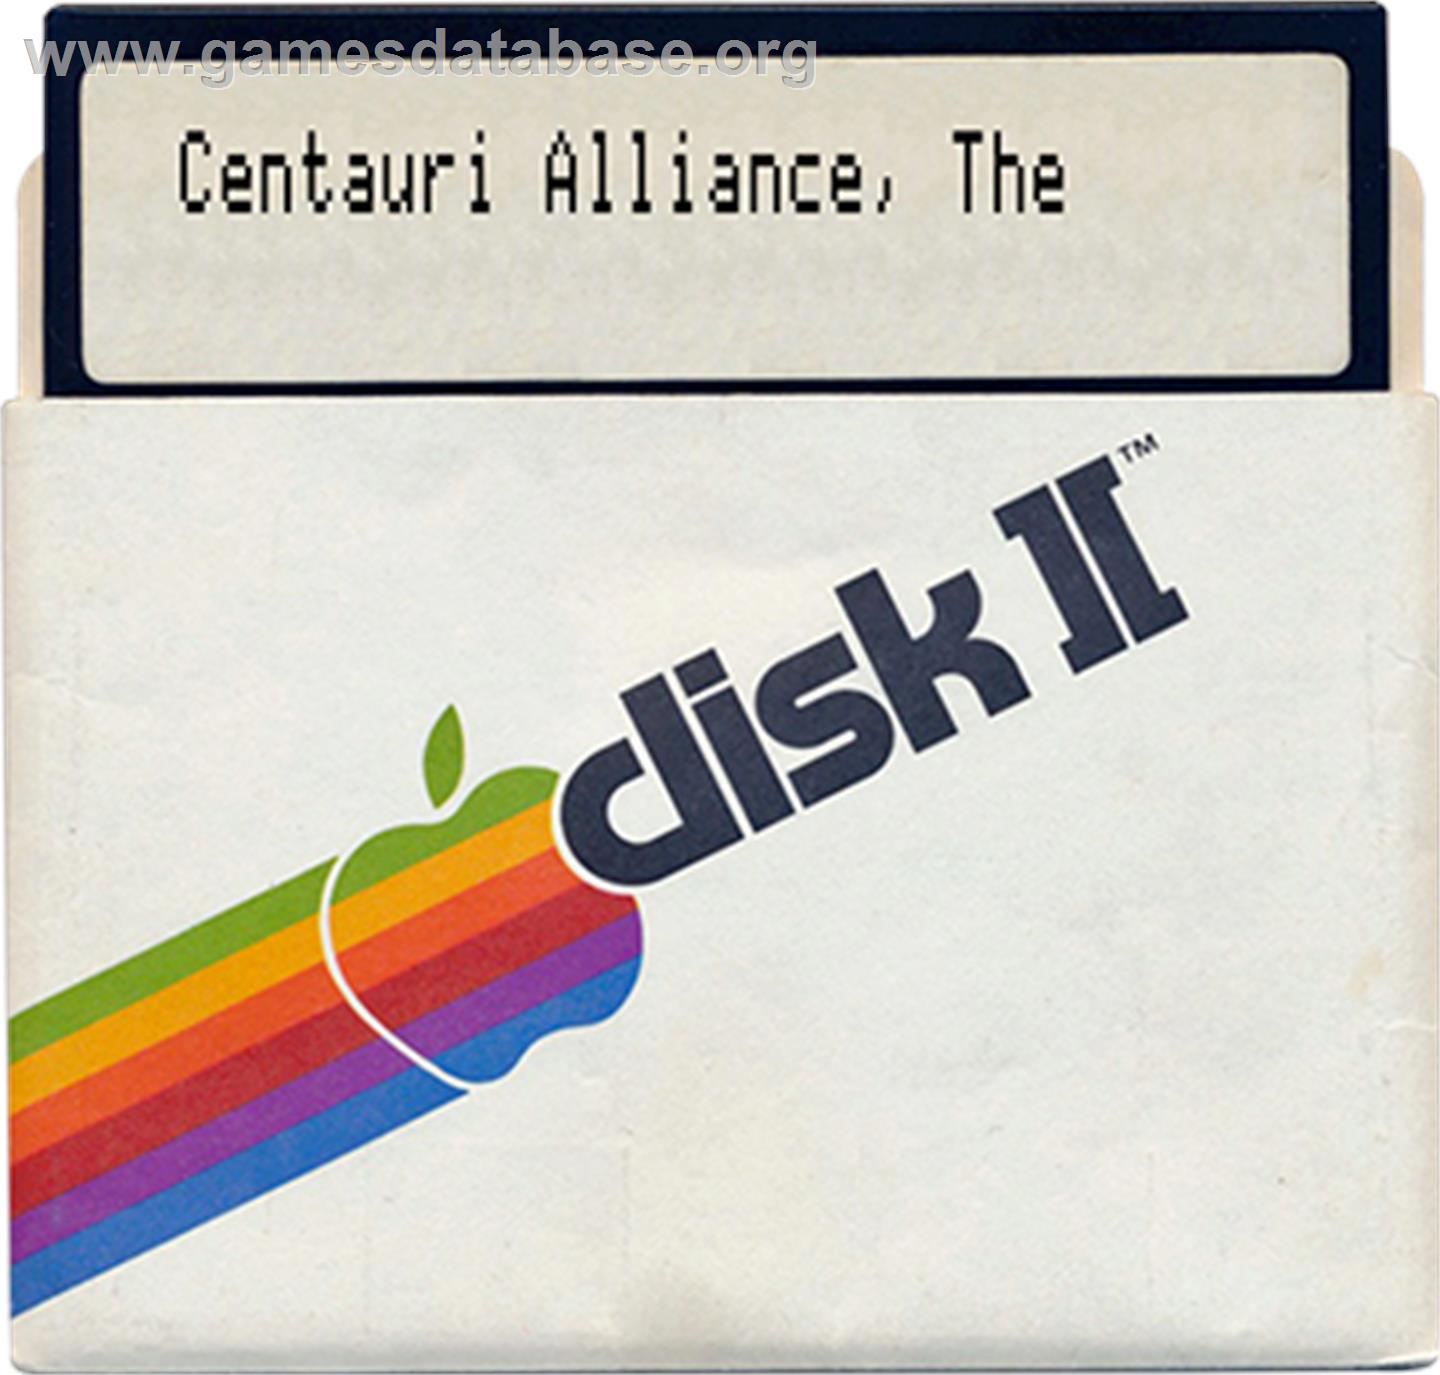 Centauri Alliance - Apple II - Artwork - Disc